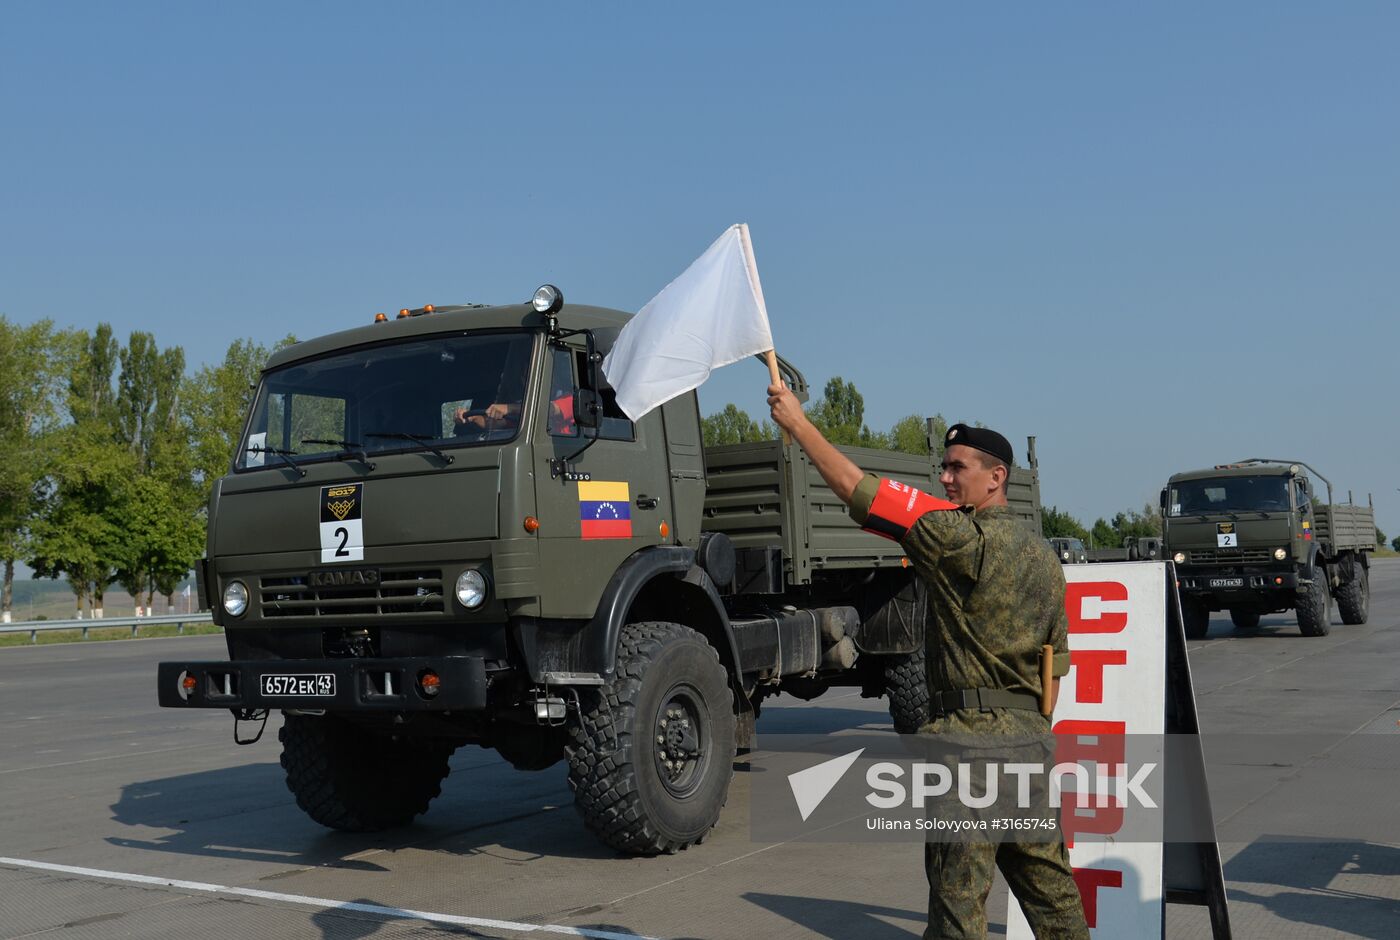 International contest "Masters of the Autoarmoured Equipment" in Voronezh Region